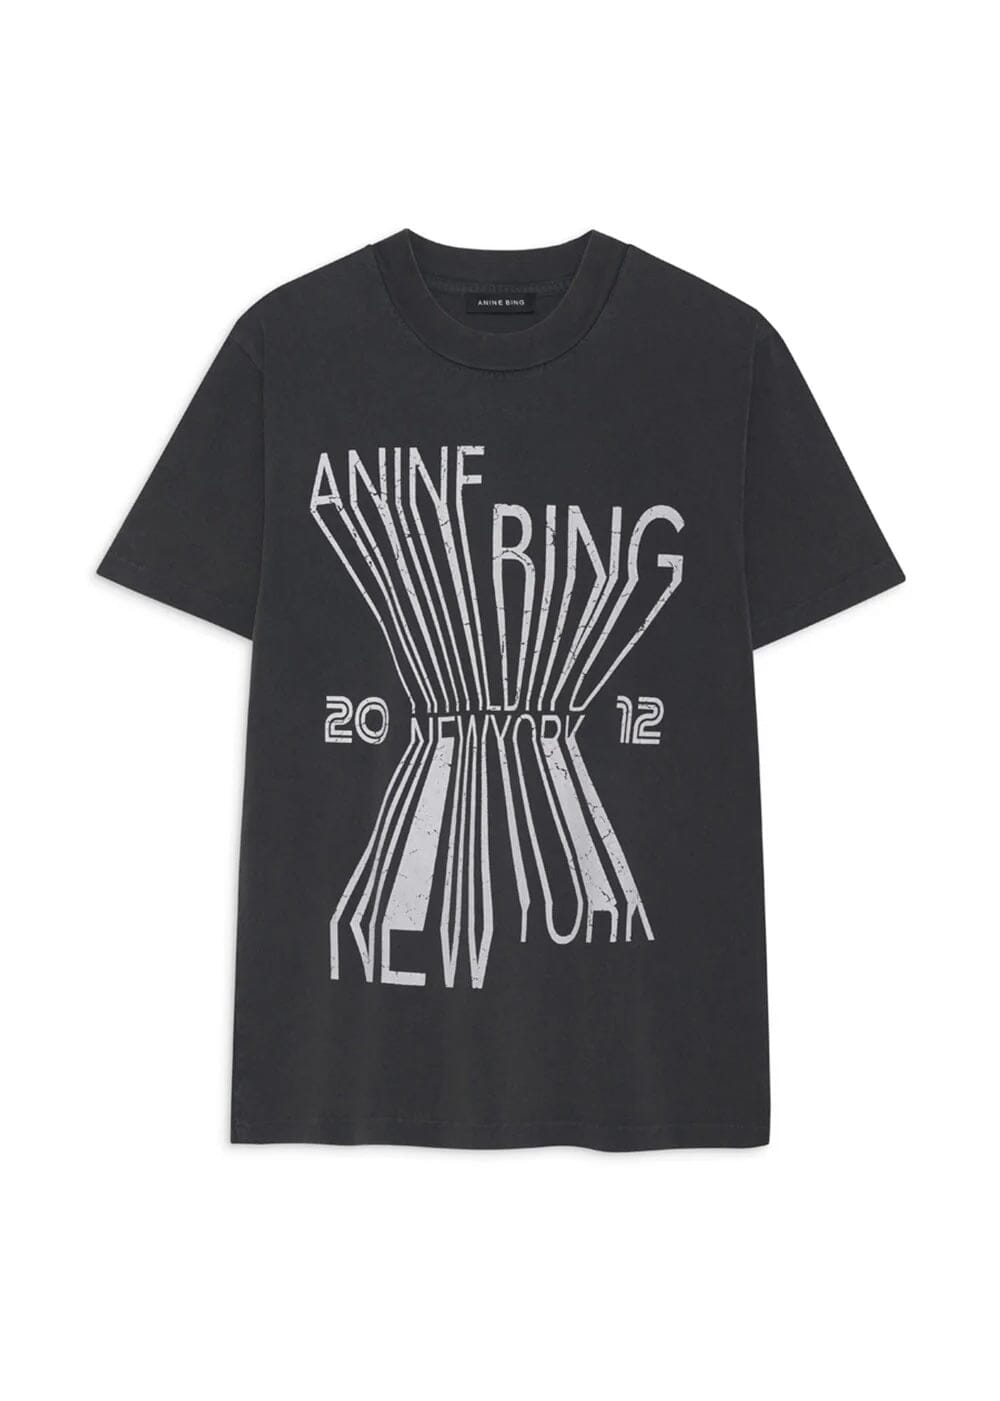 Anine Bing Colby Tee Bing New York Washed Black T-shirt